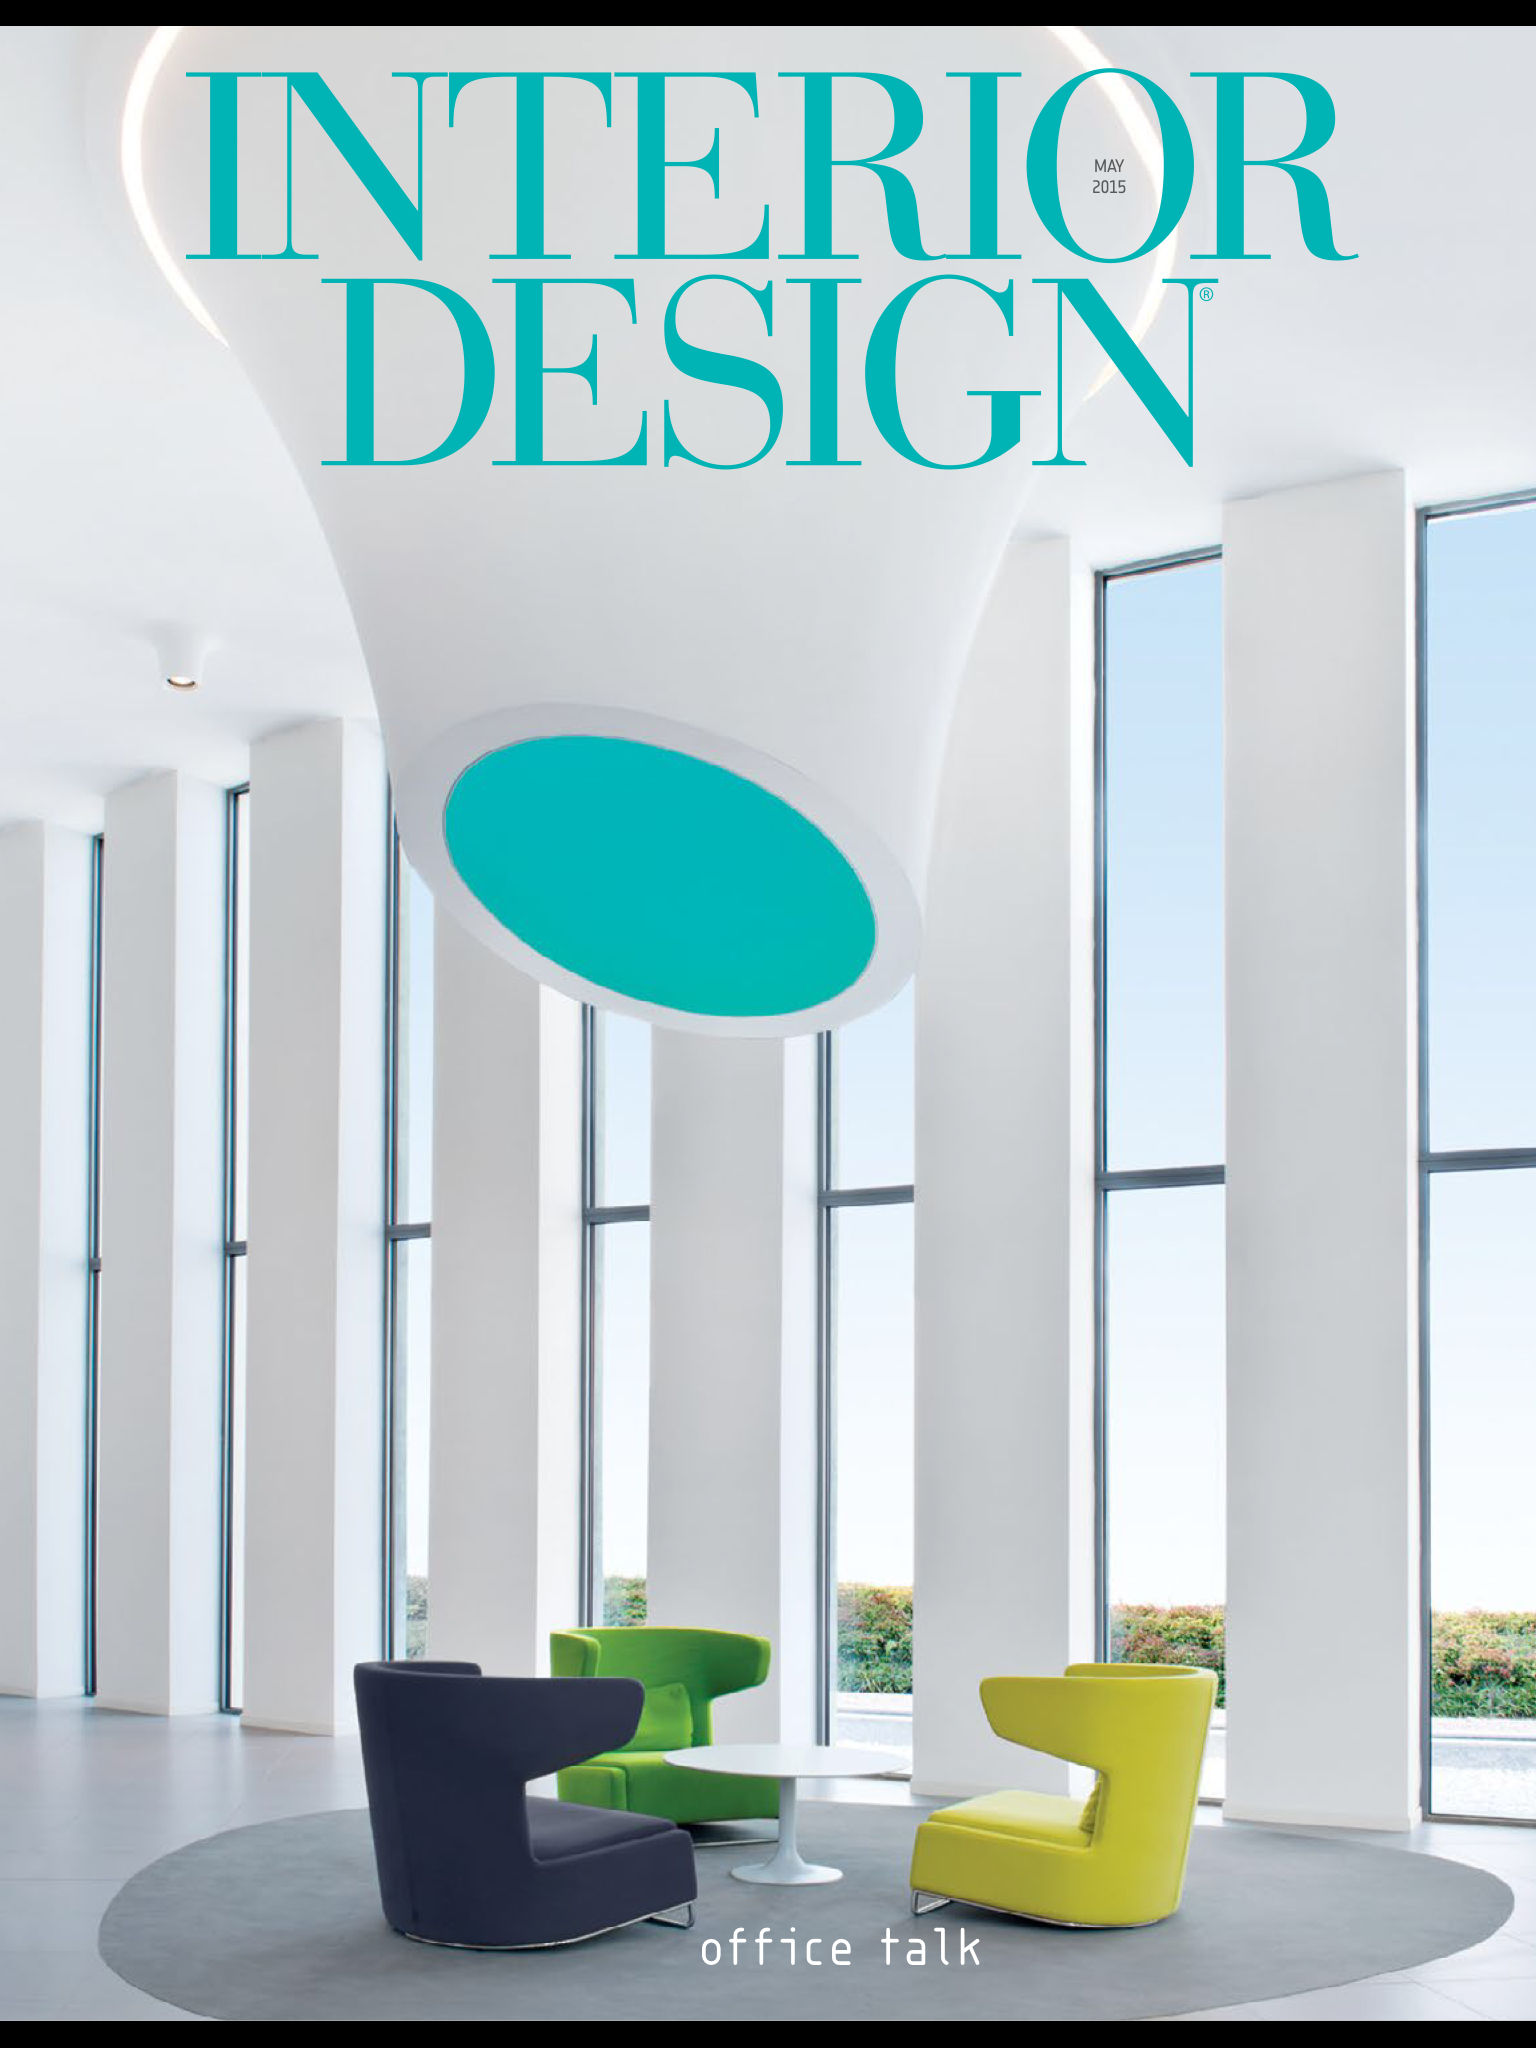 Based Upon_London_Art Design_Press_Interior Design US